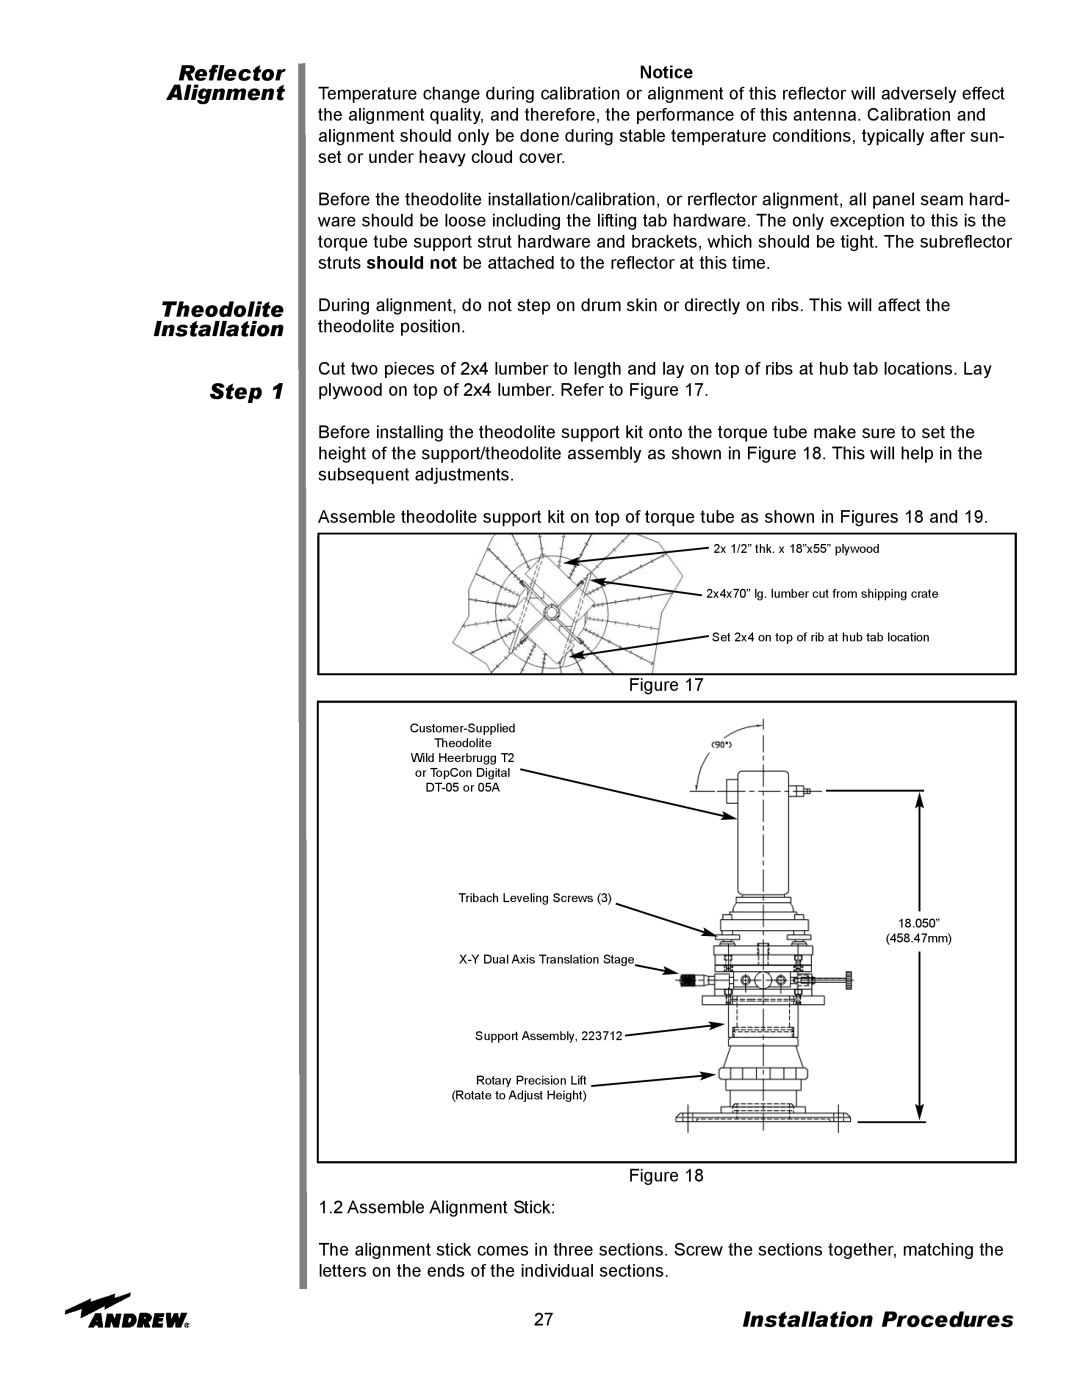 Andrew ES76PK-1 installation instructions Reflector, Alignment, Theodolite, Step, Installation Procedures 